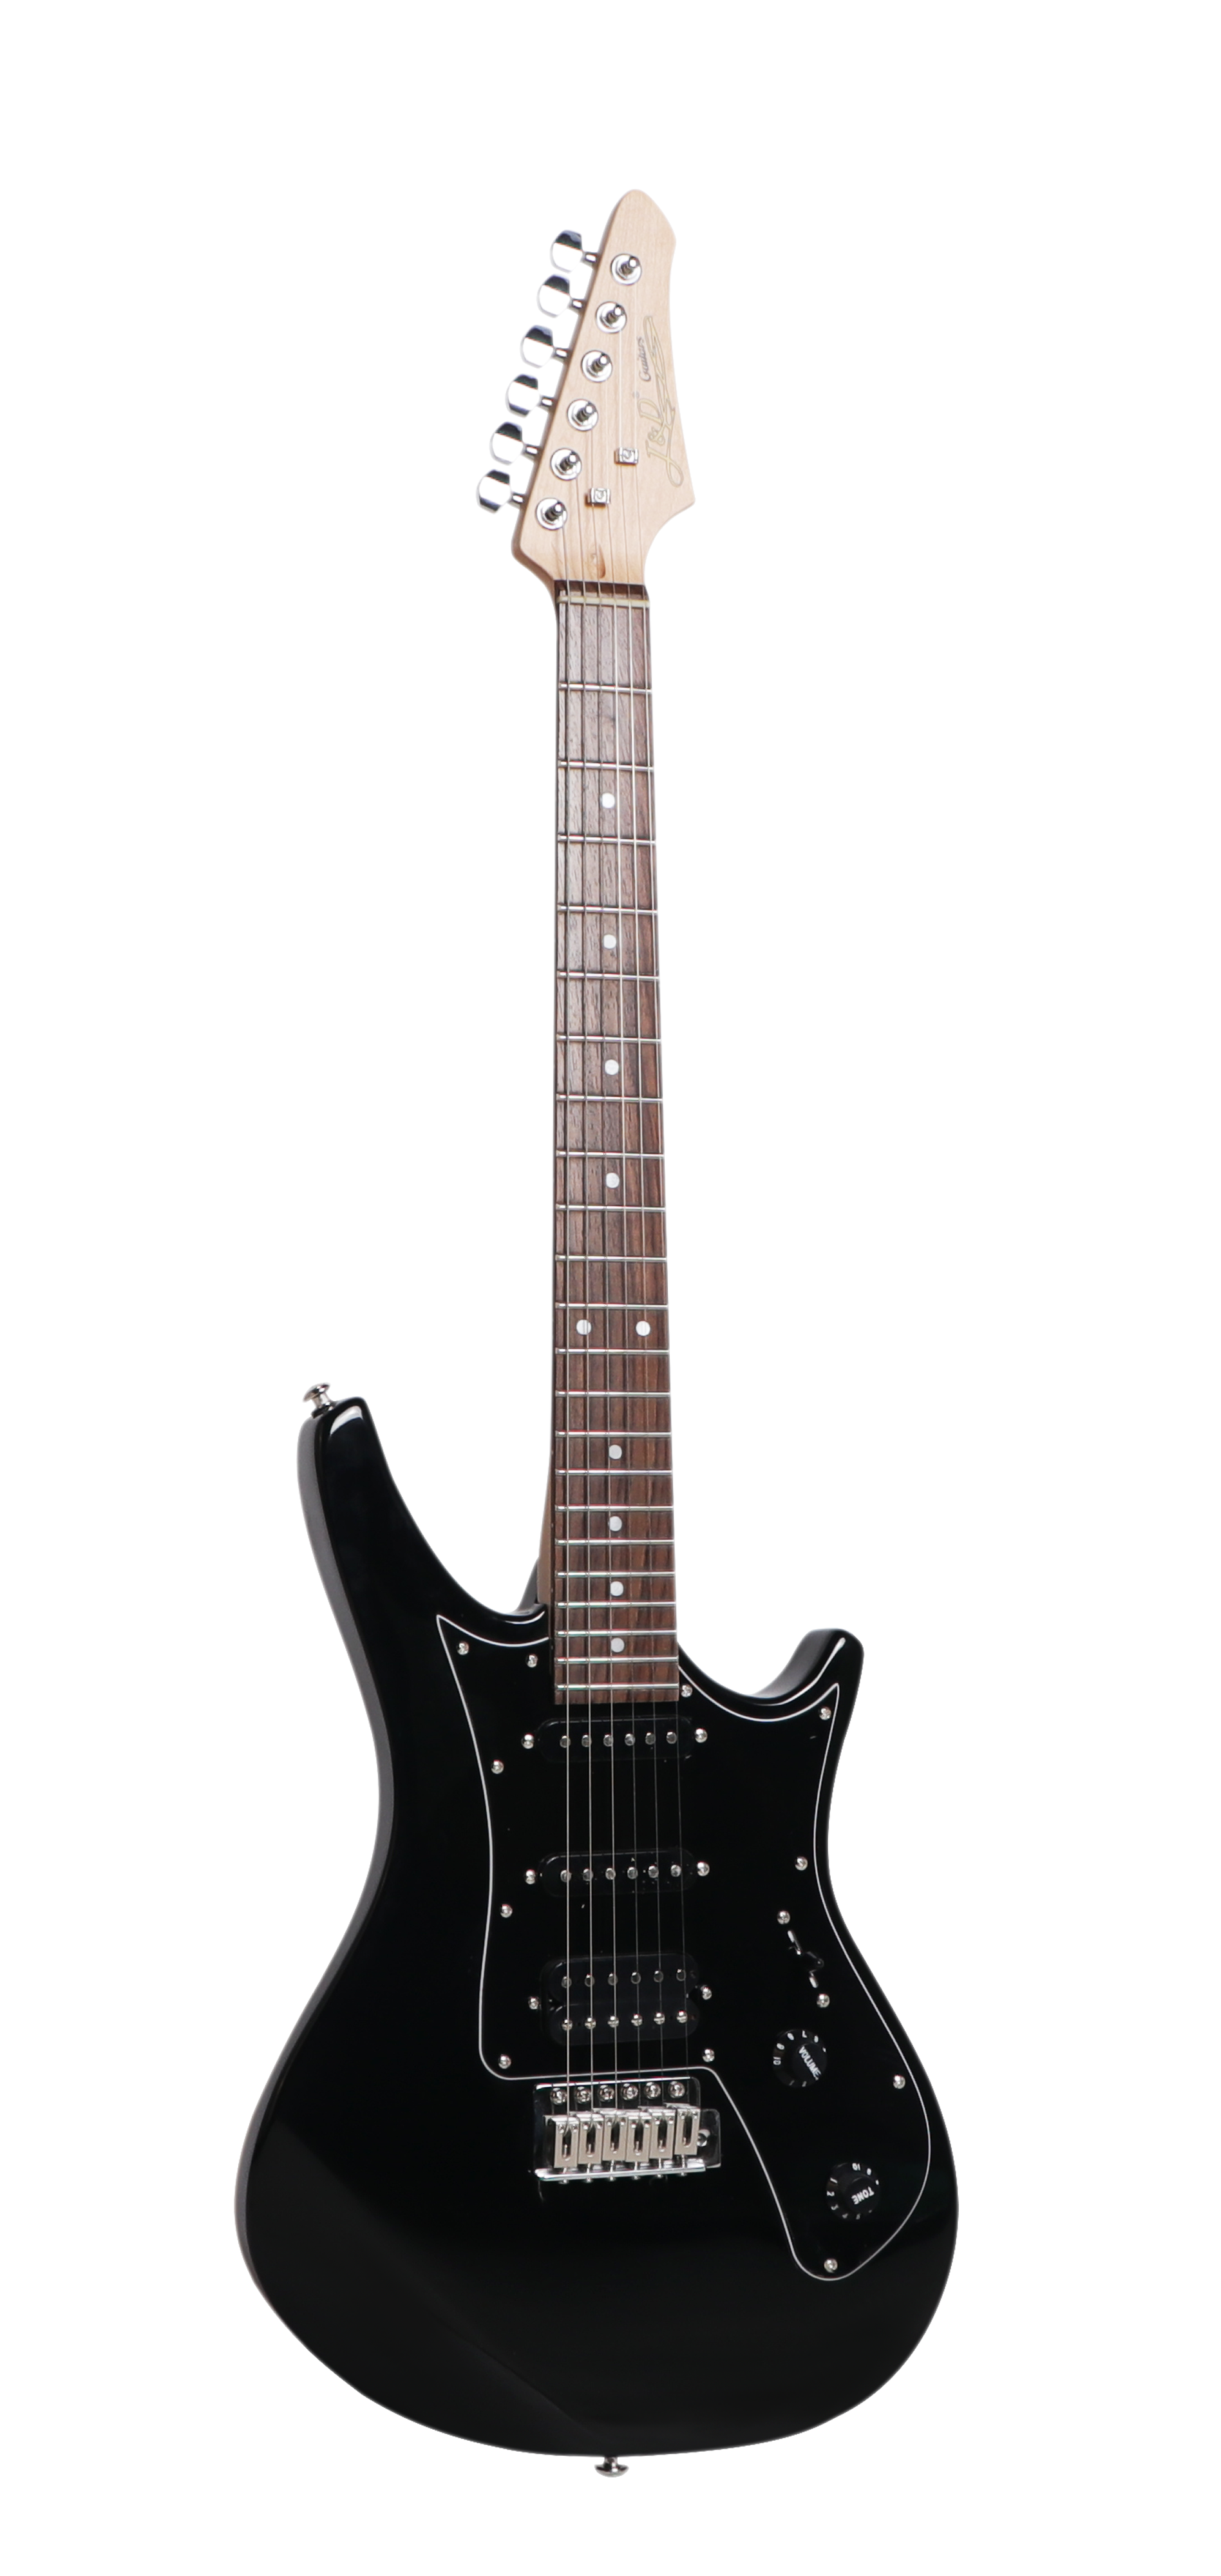 J&d Std 50 Electric Guitar Black (Bk)